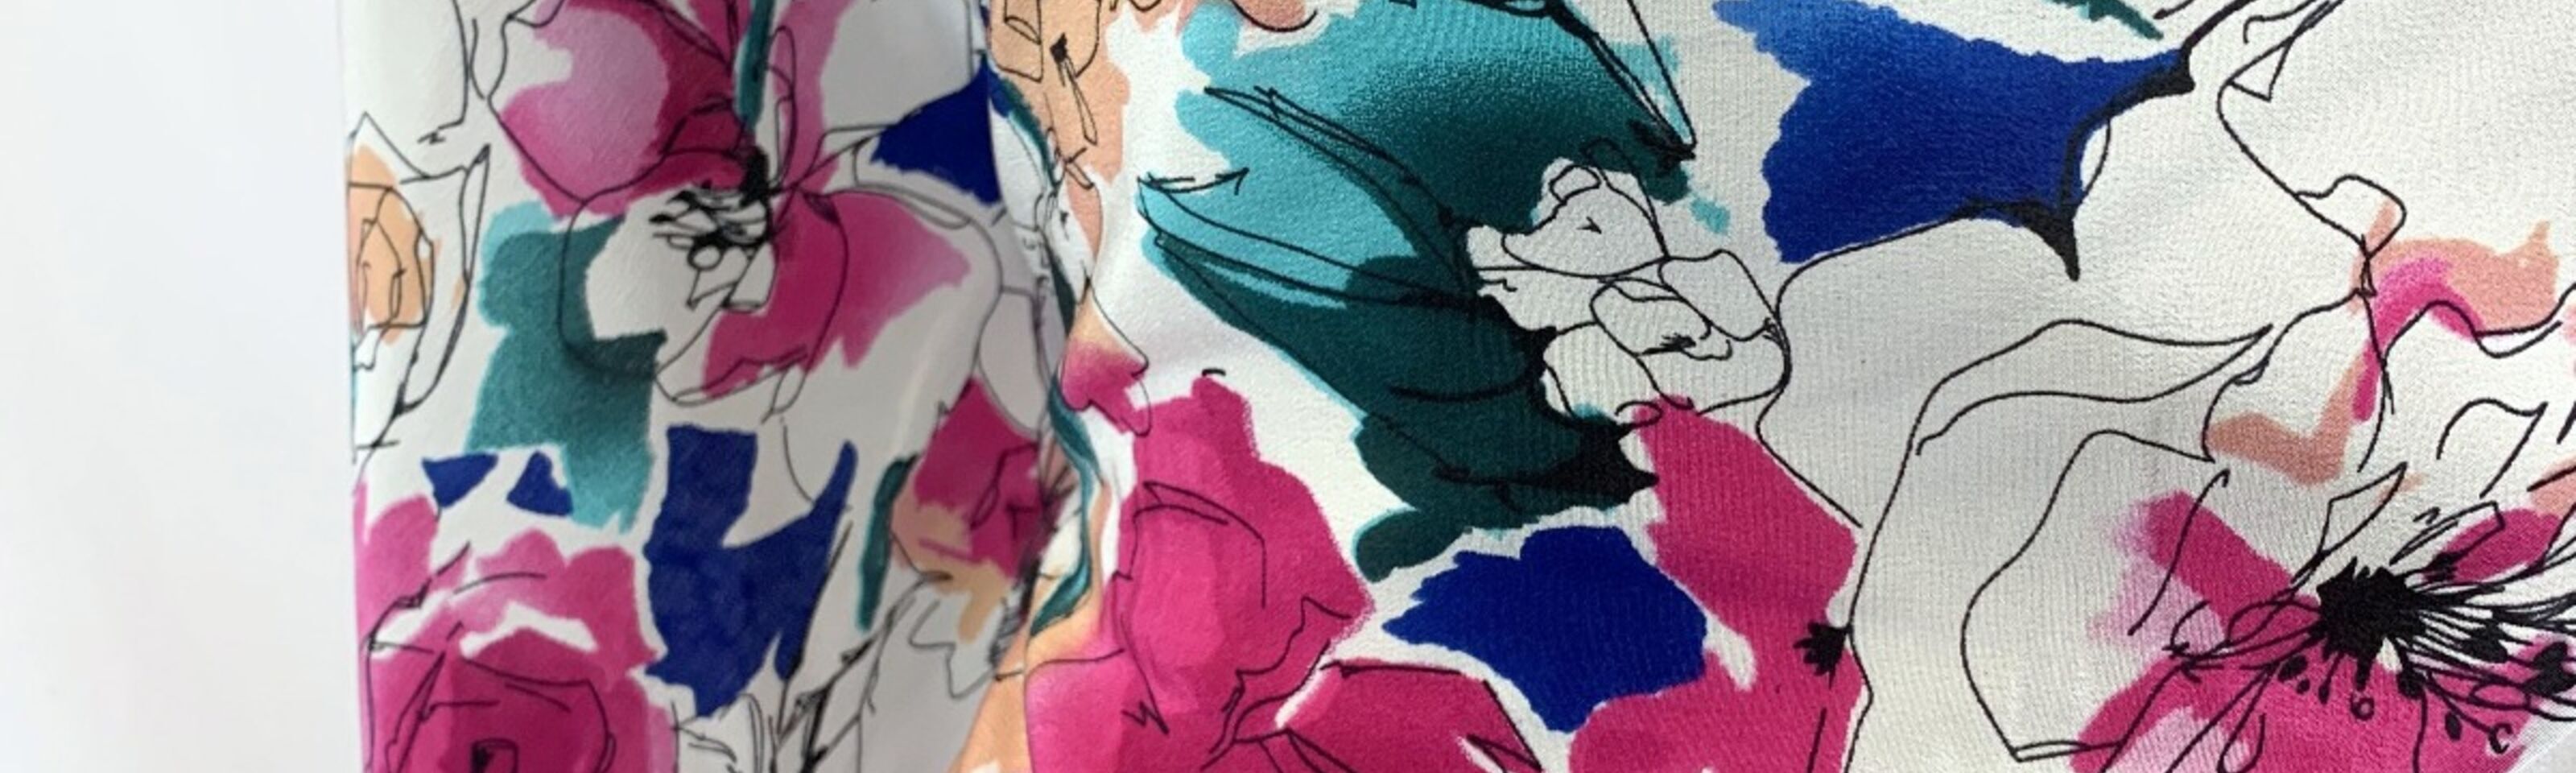 Silk - Artists Dress - Floral Design Multicoloured Dress Fabric - Close Up